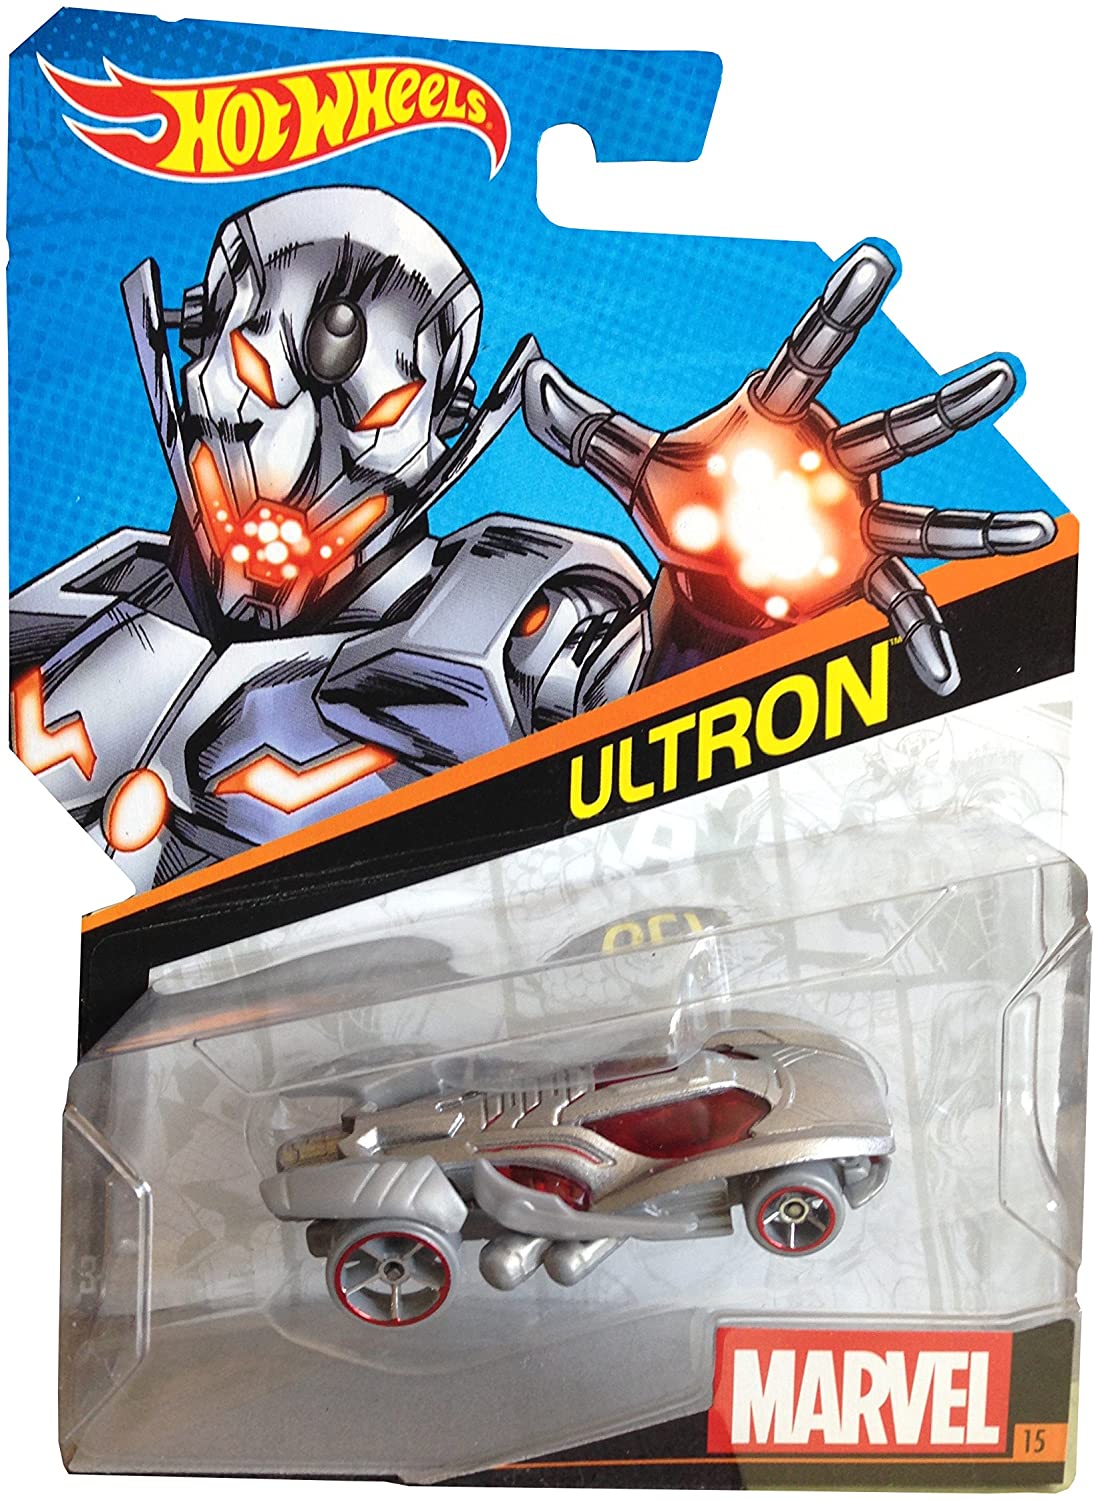 Hot Wheels Marvel Ultron